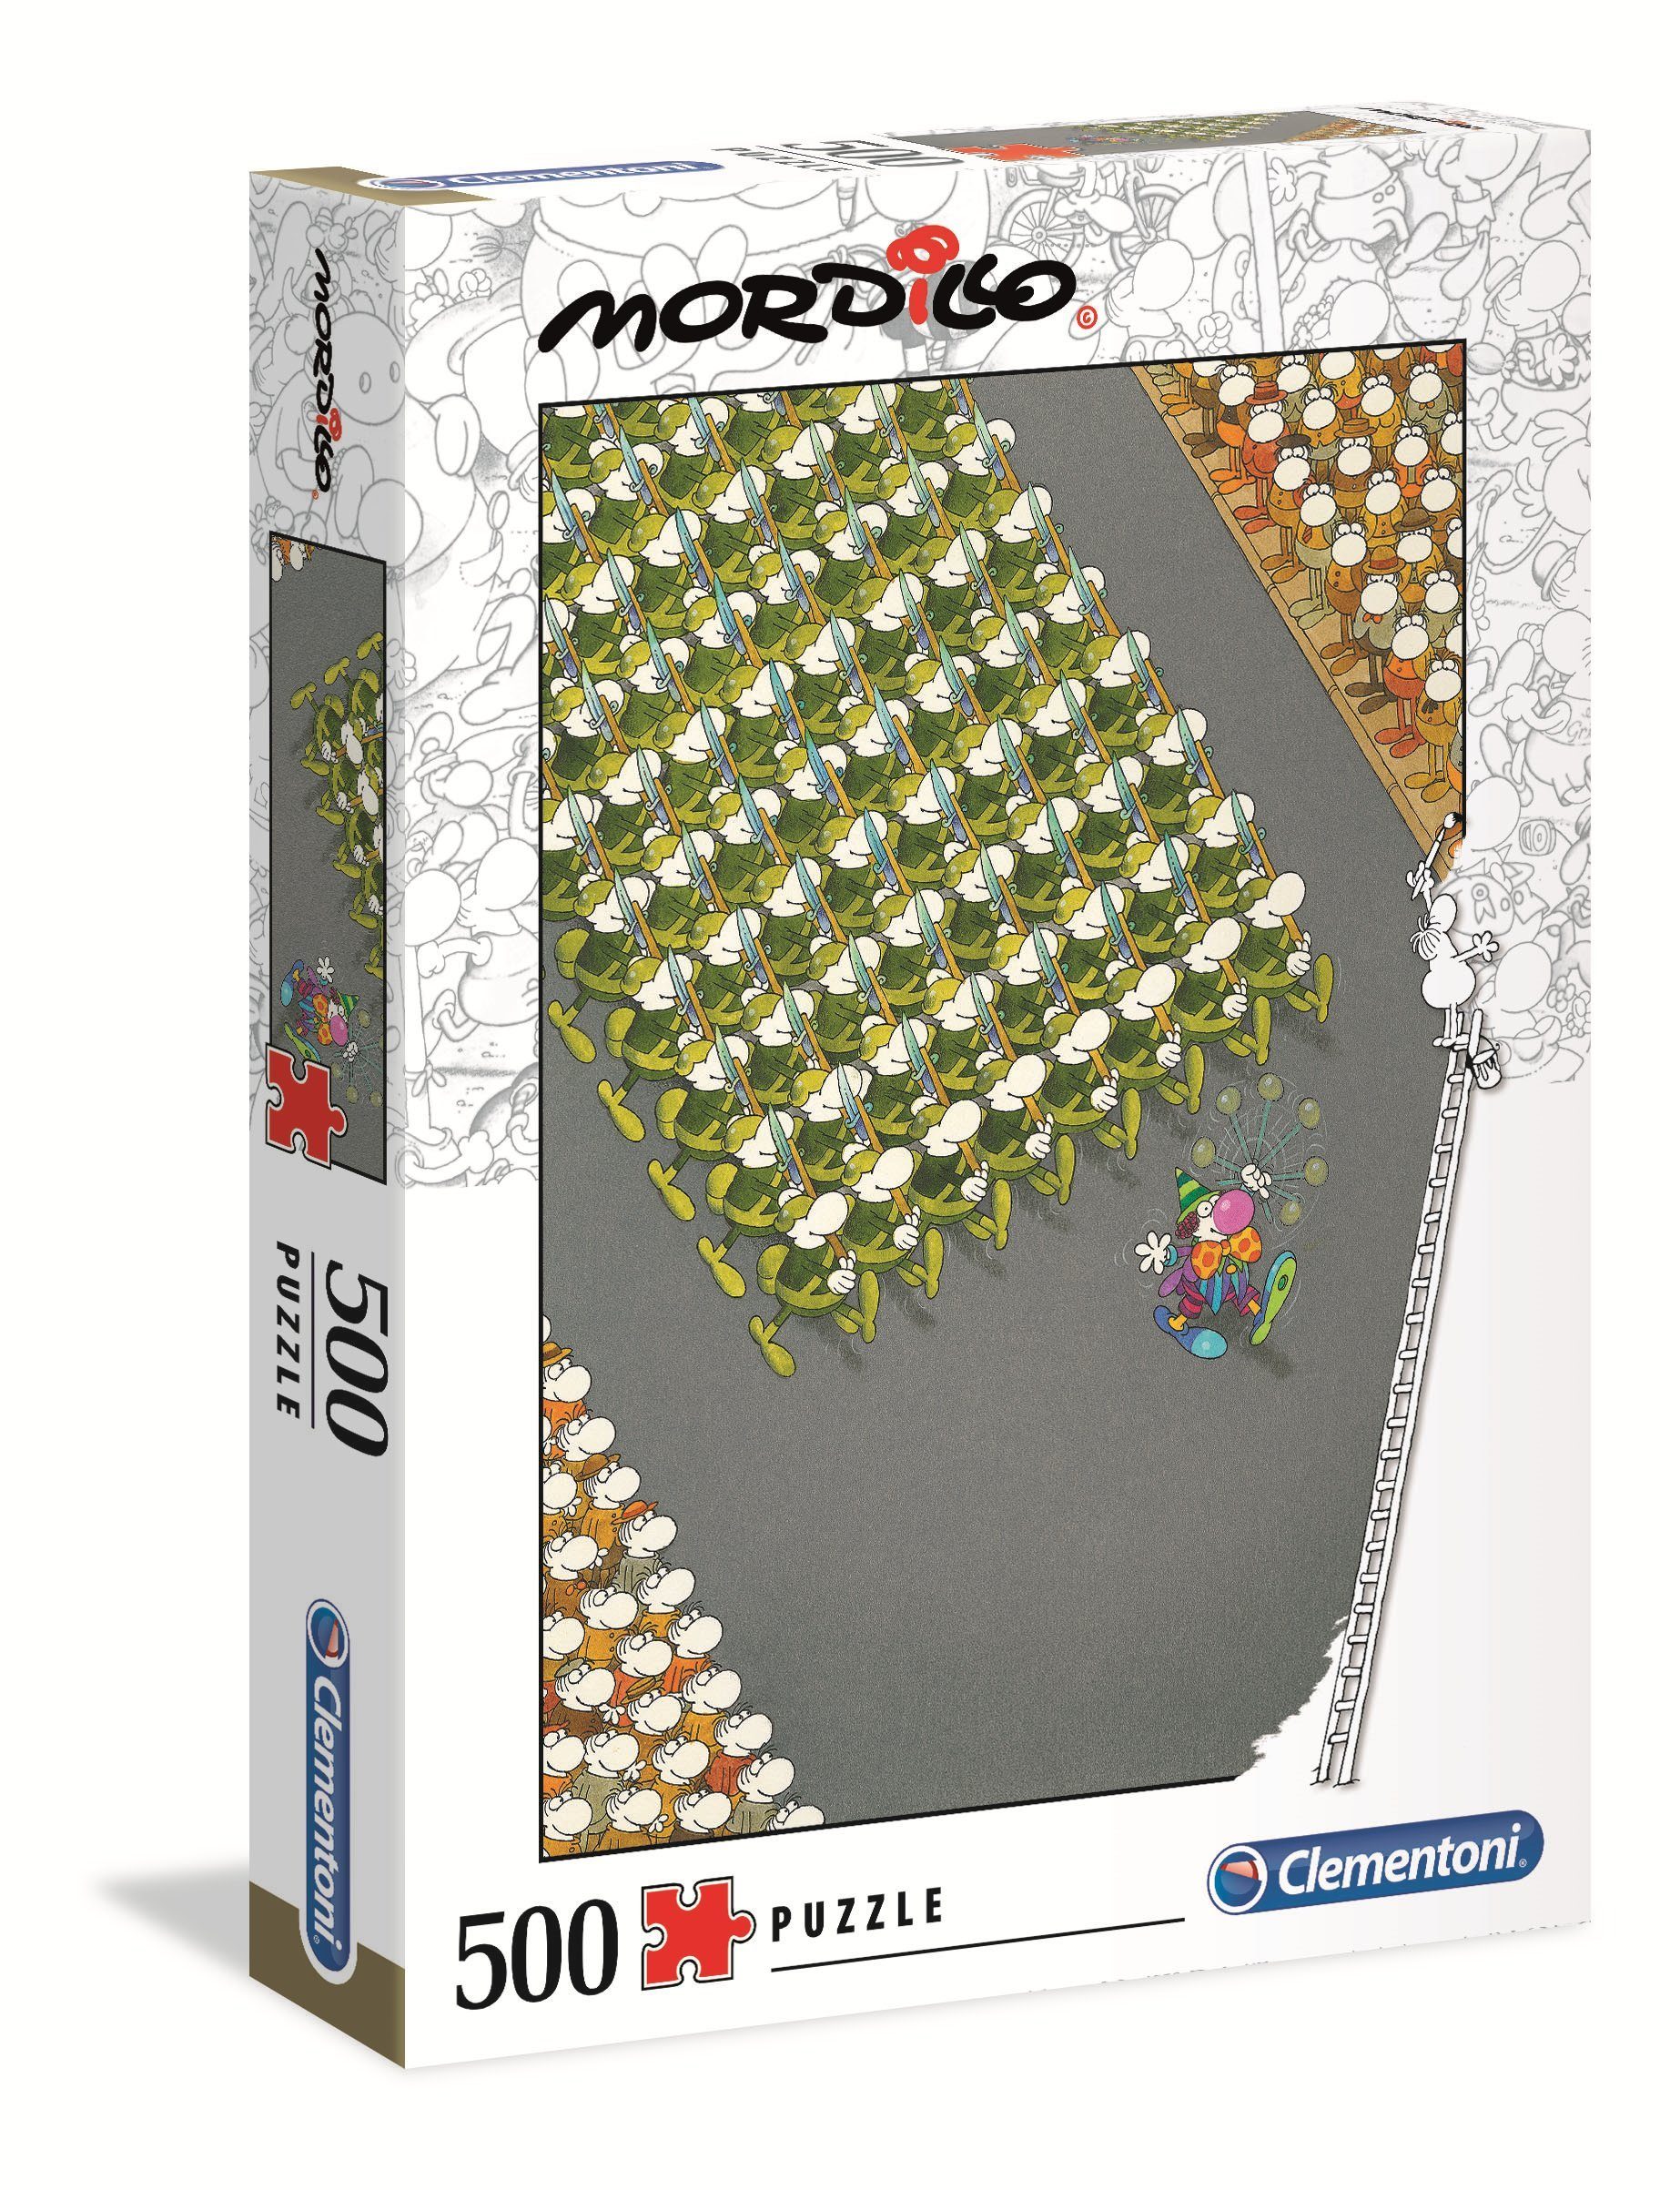 Supermarkt Clementoni® Puzzle 35078 Mordillo Marsch Puzzle, Puzzleteile 500 Teile Der 500